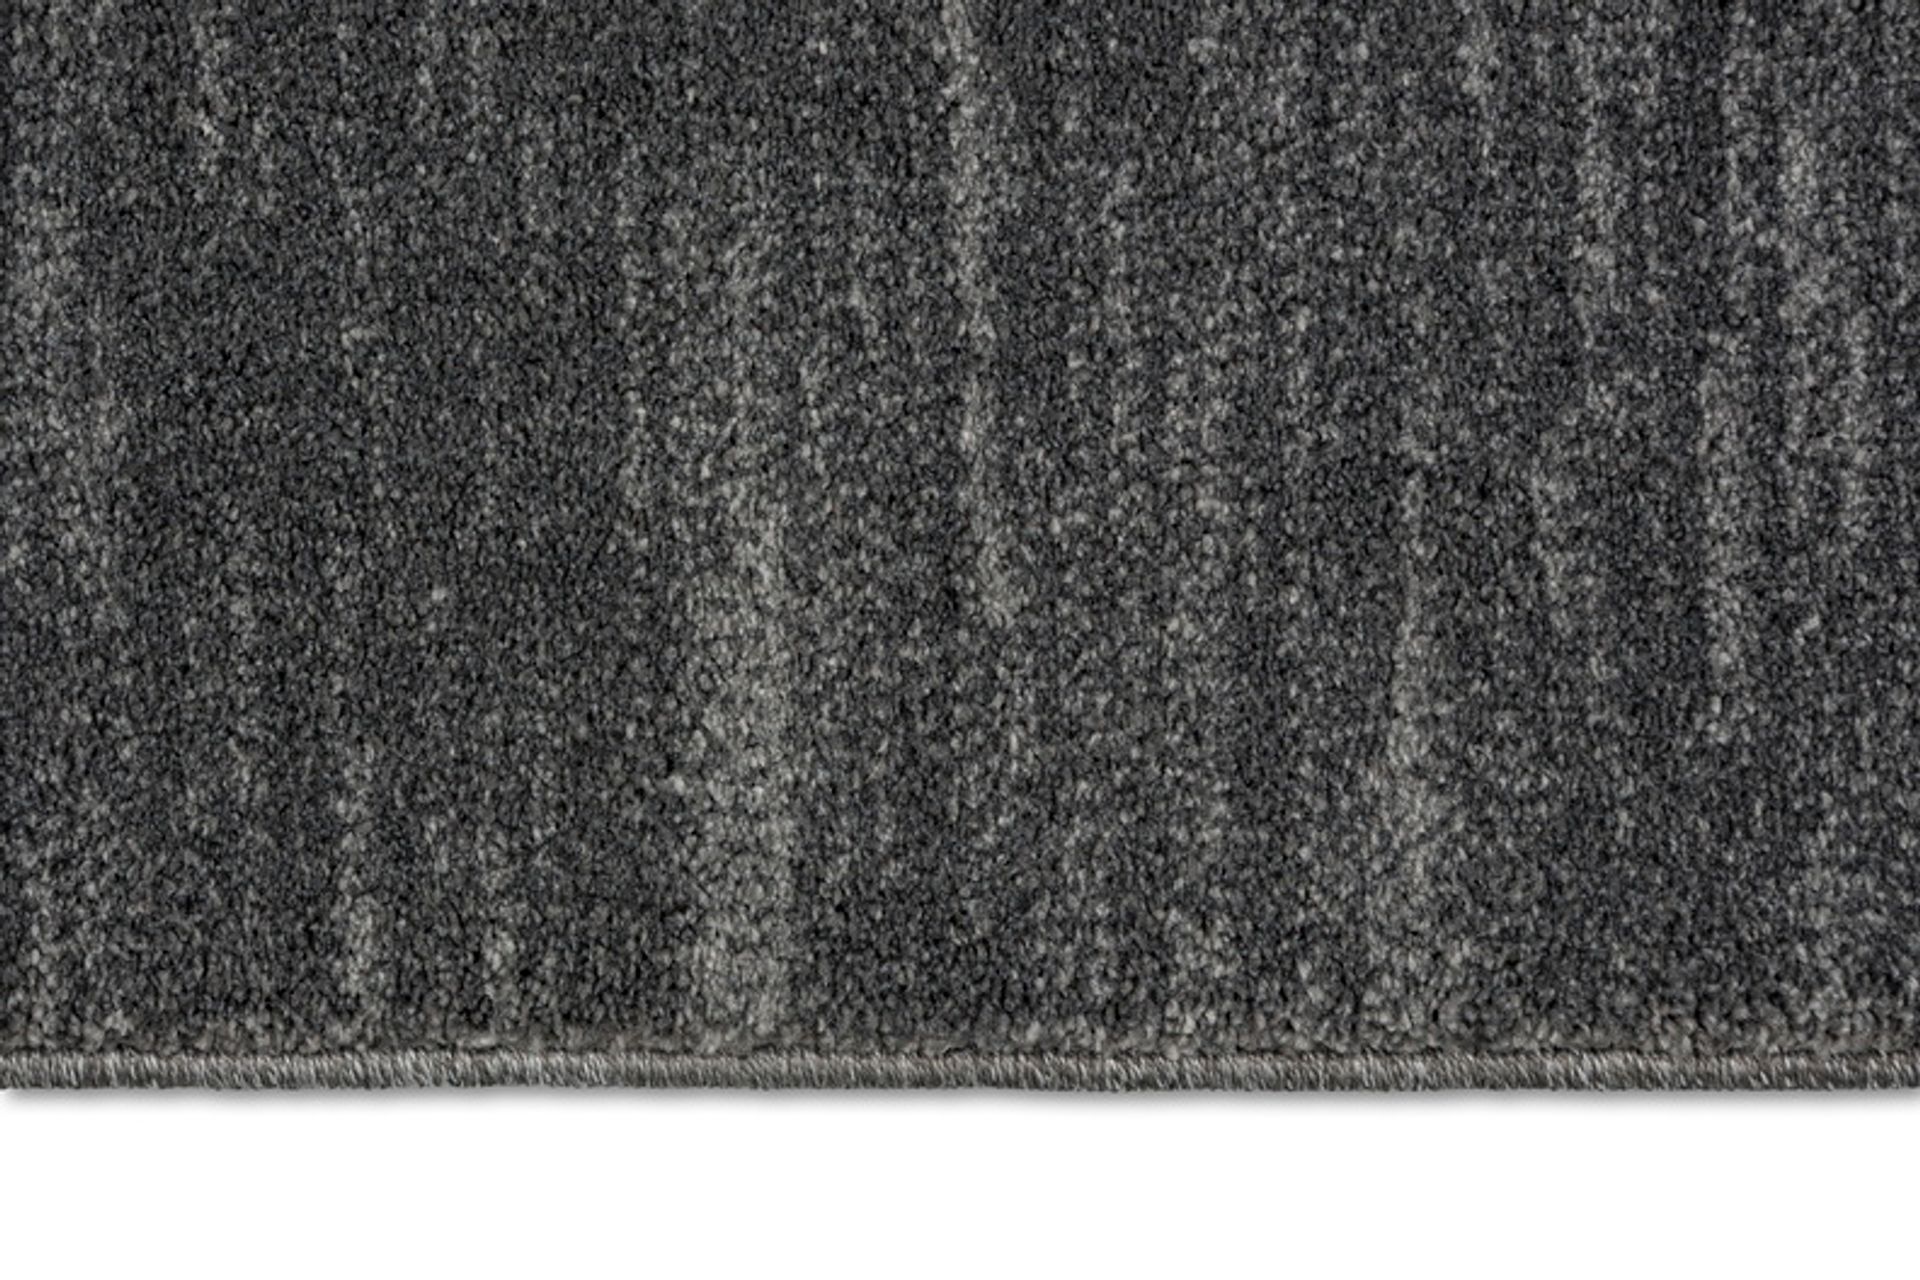 Teppich BALANCE Dunkelgrau - 160 cm x 230 cm